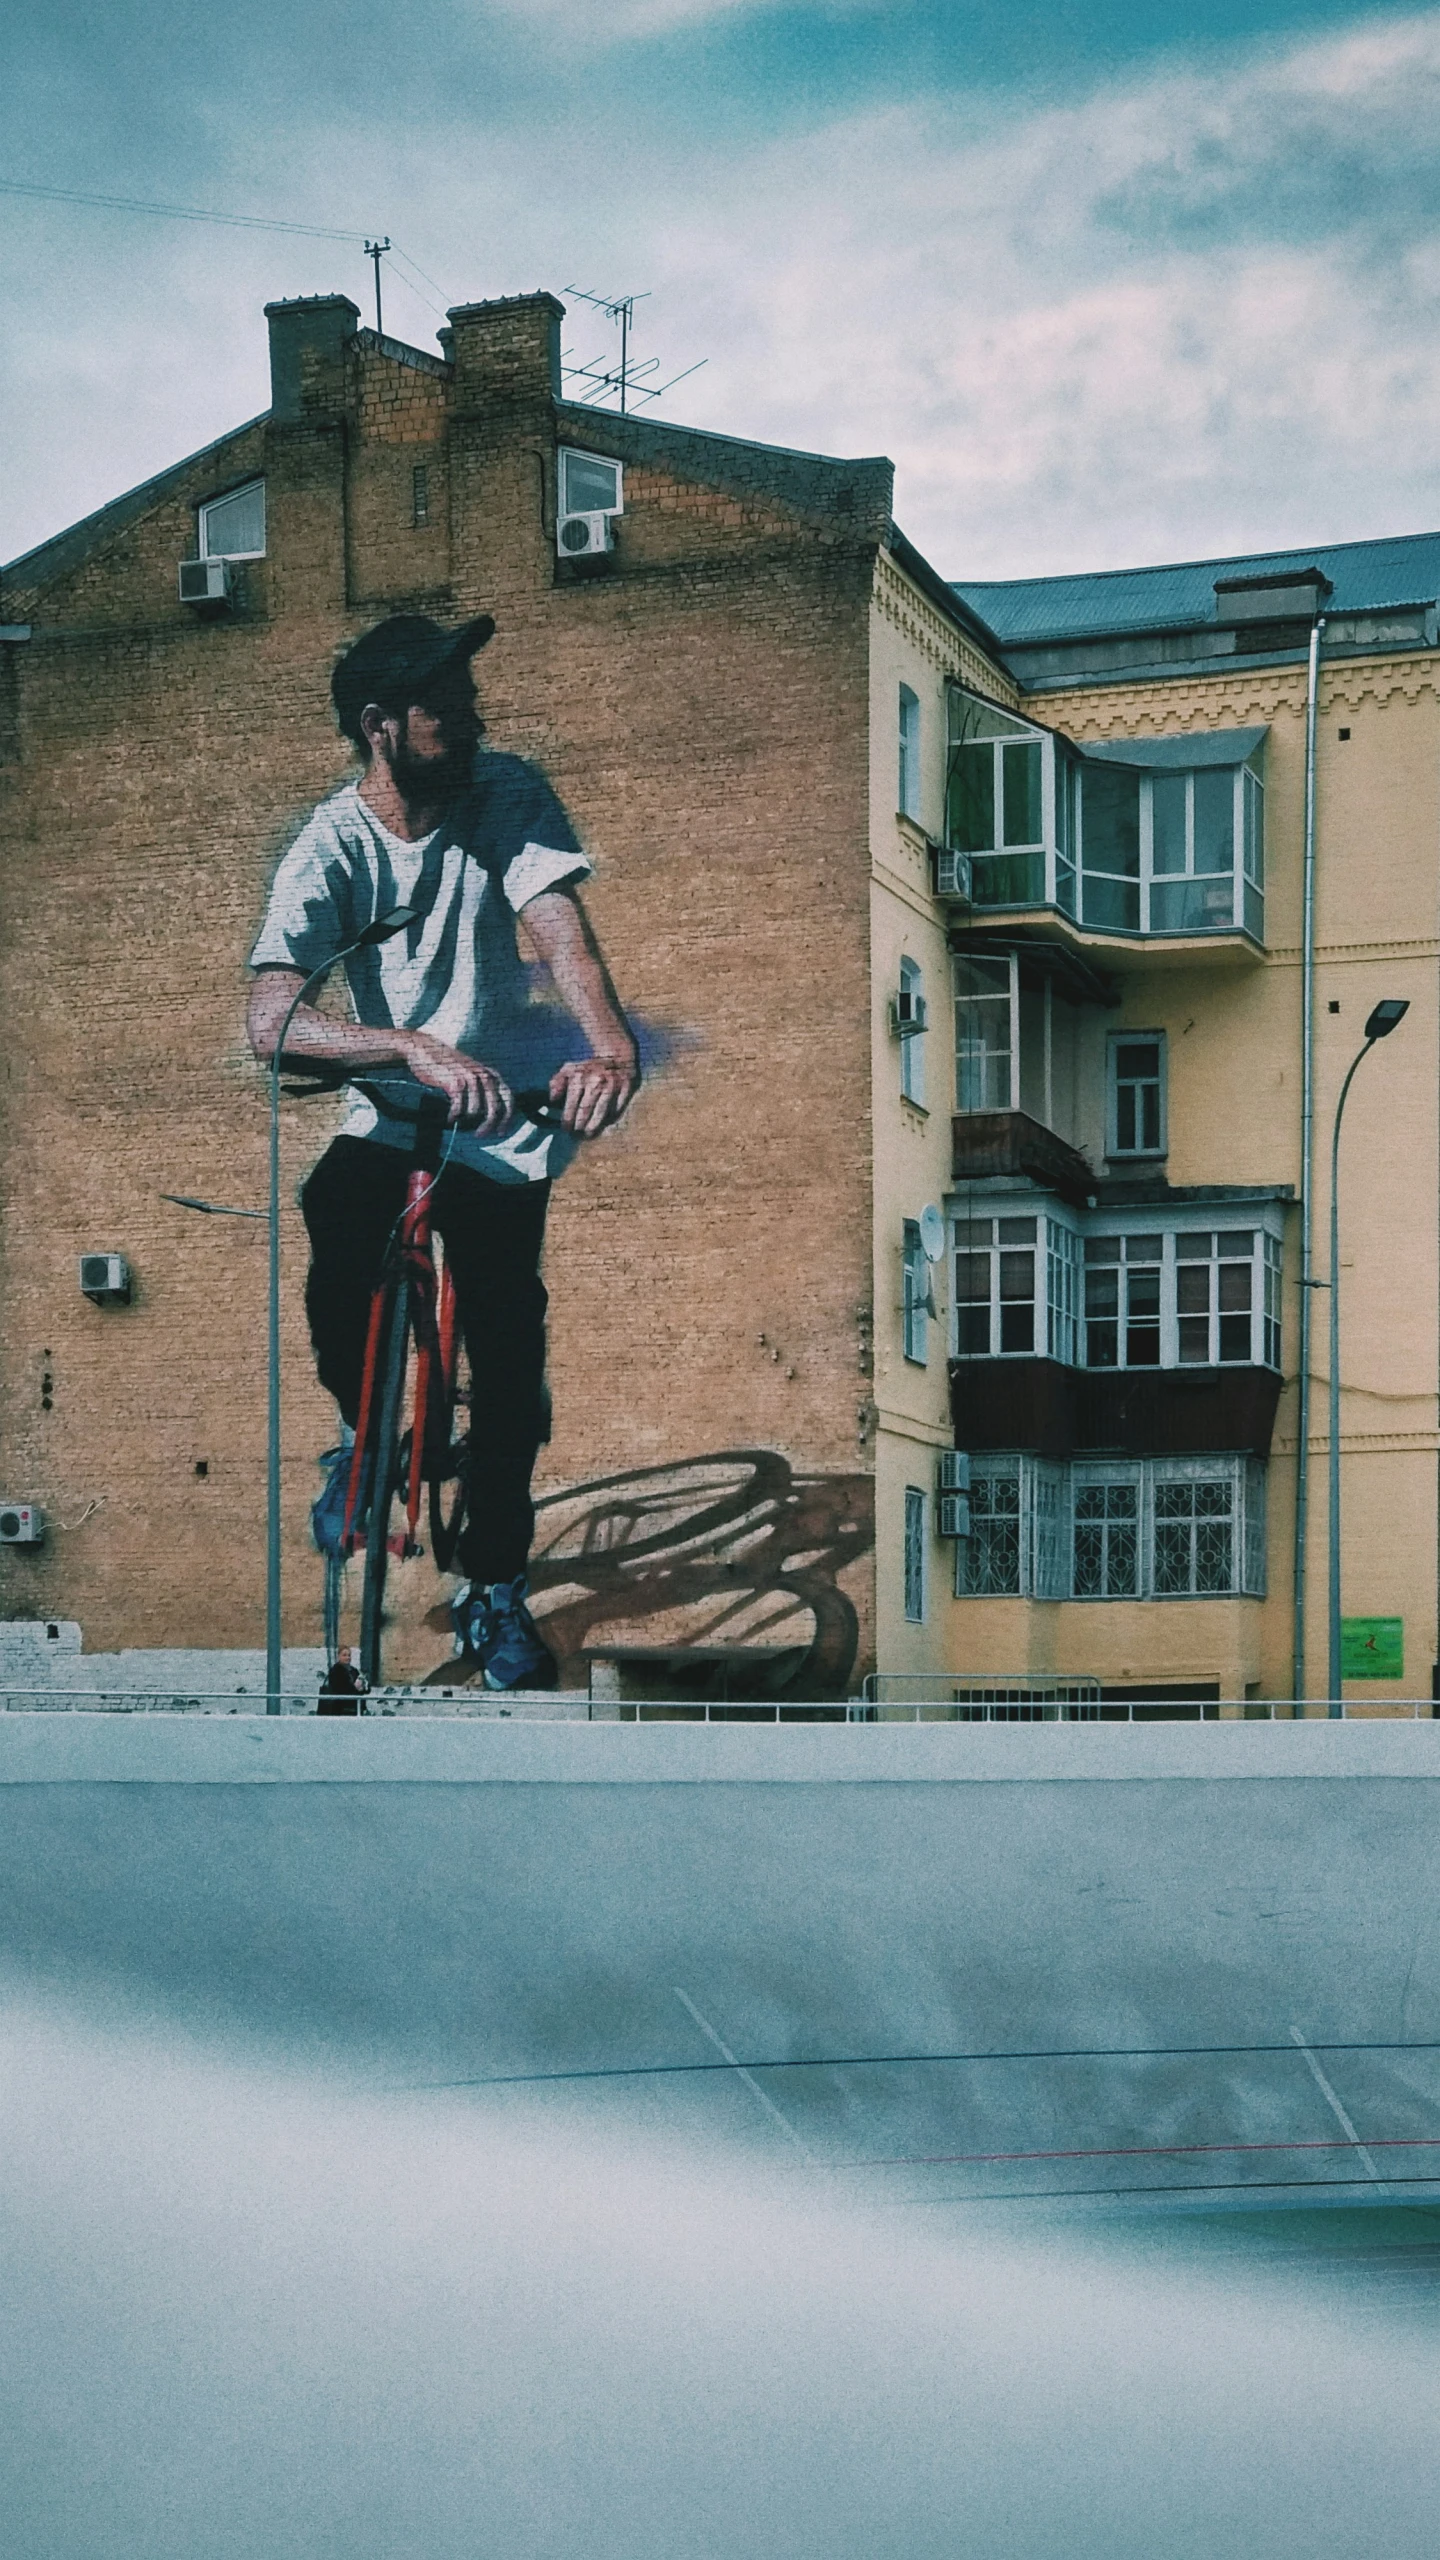 a man is doing skateboard tricks near an old building